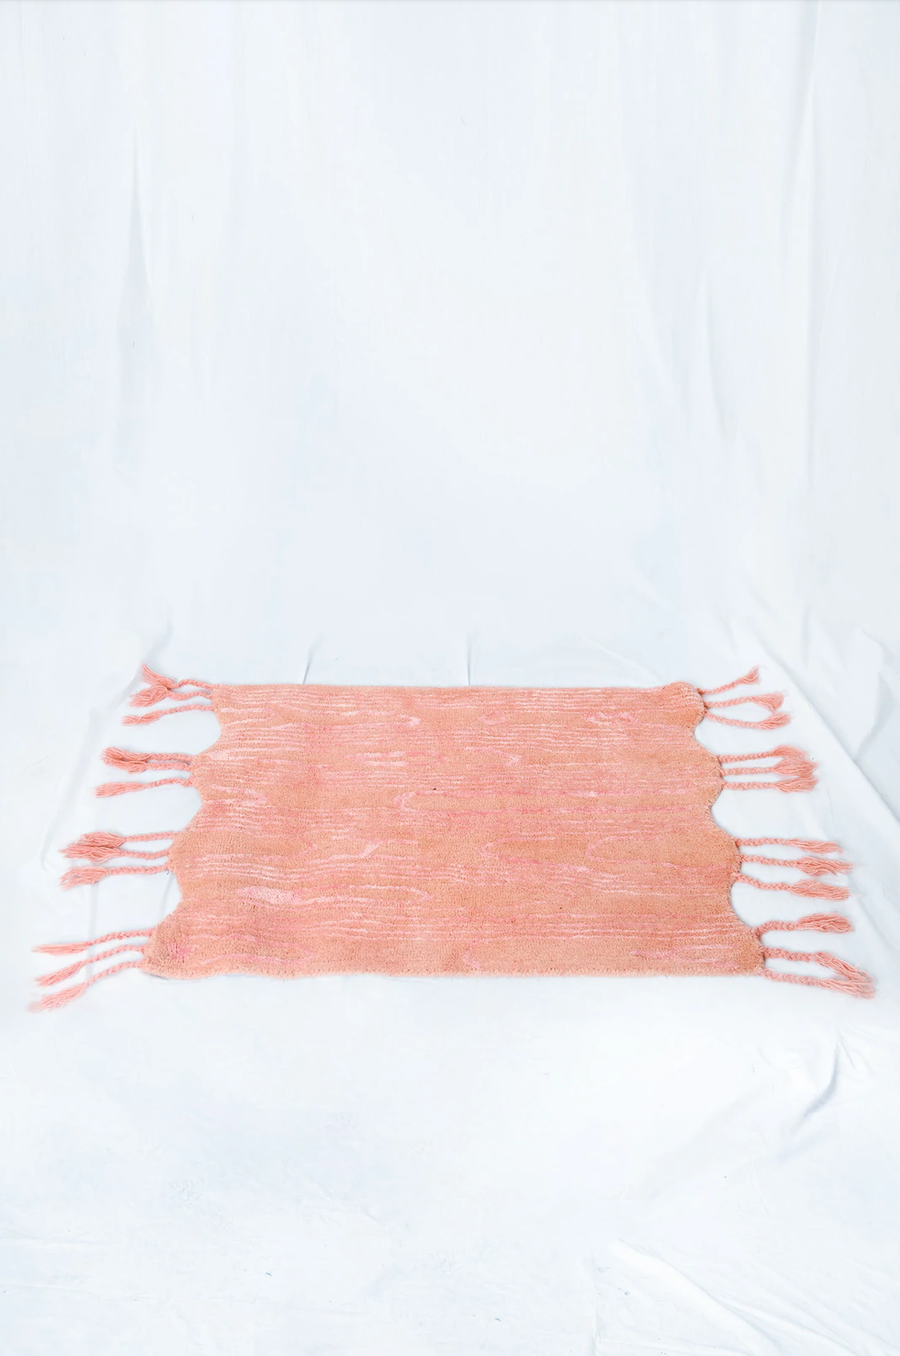 Soft pink hand-tufted rug featured in Batsheva Hay's Batsheva Home collection.